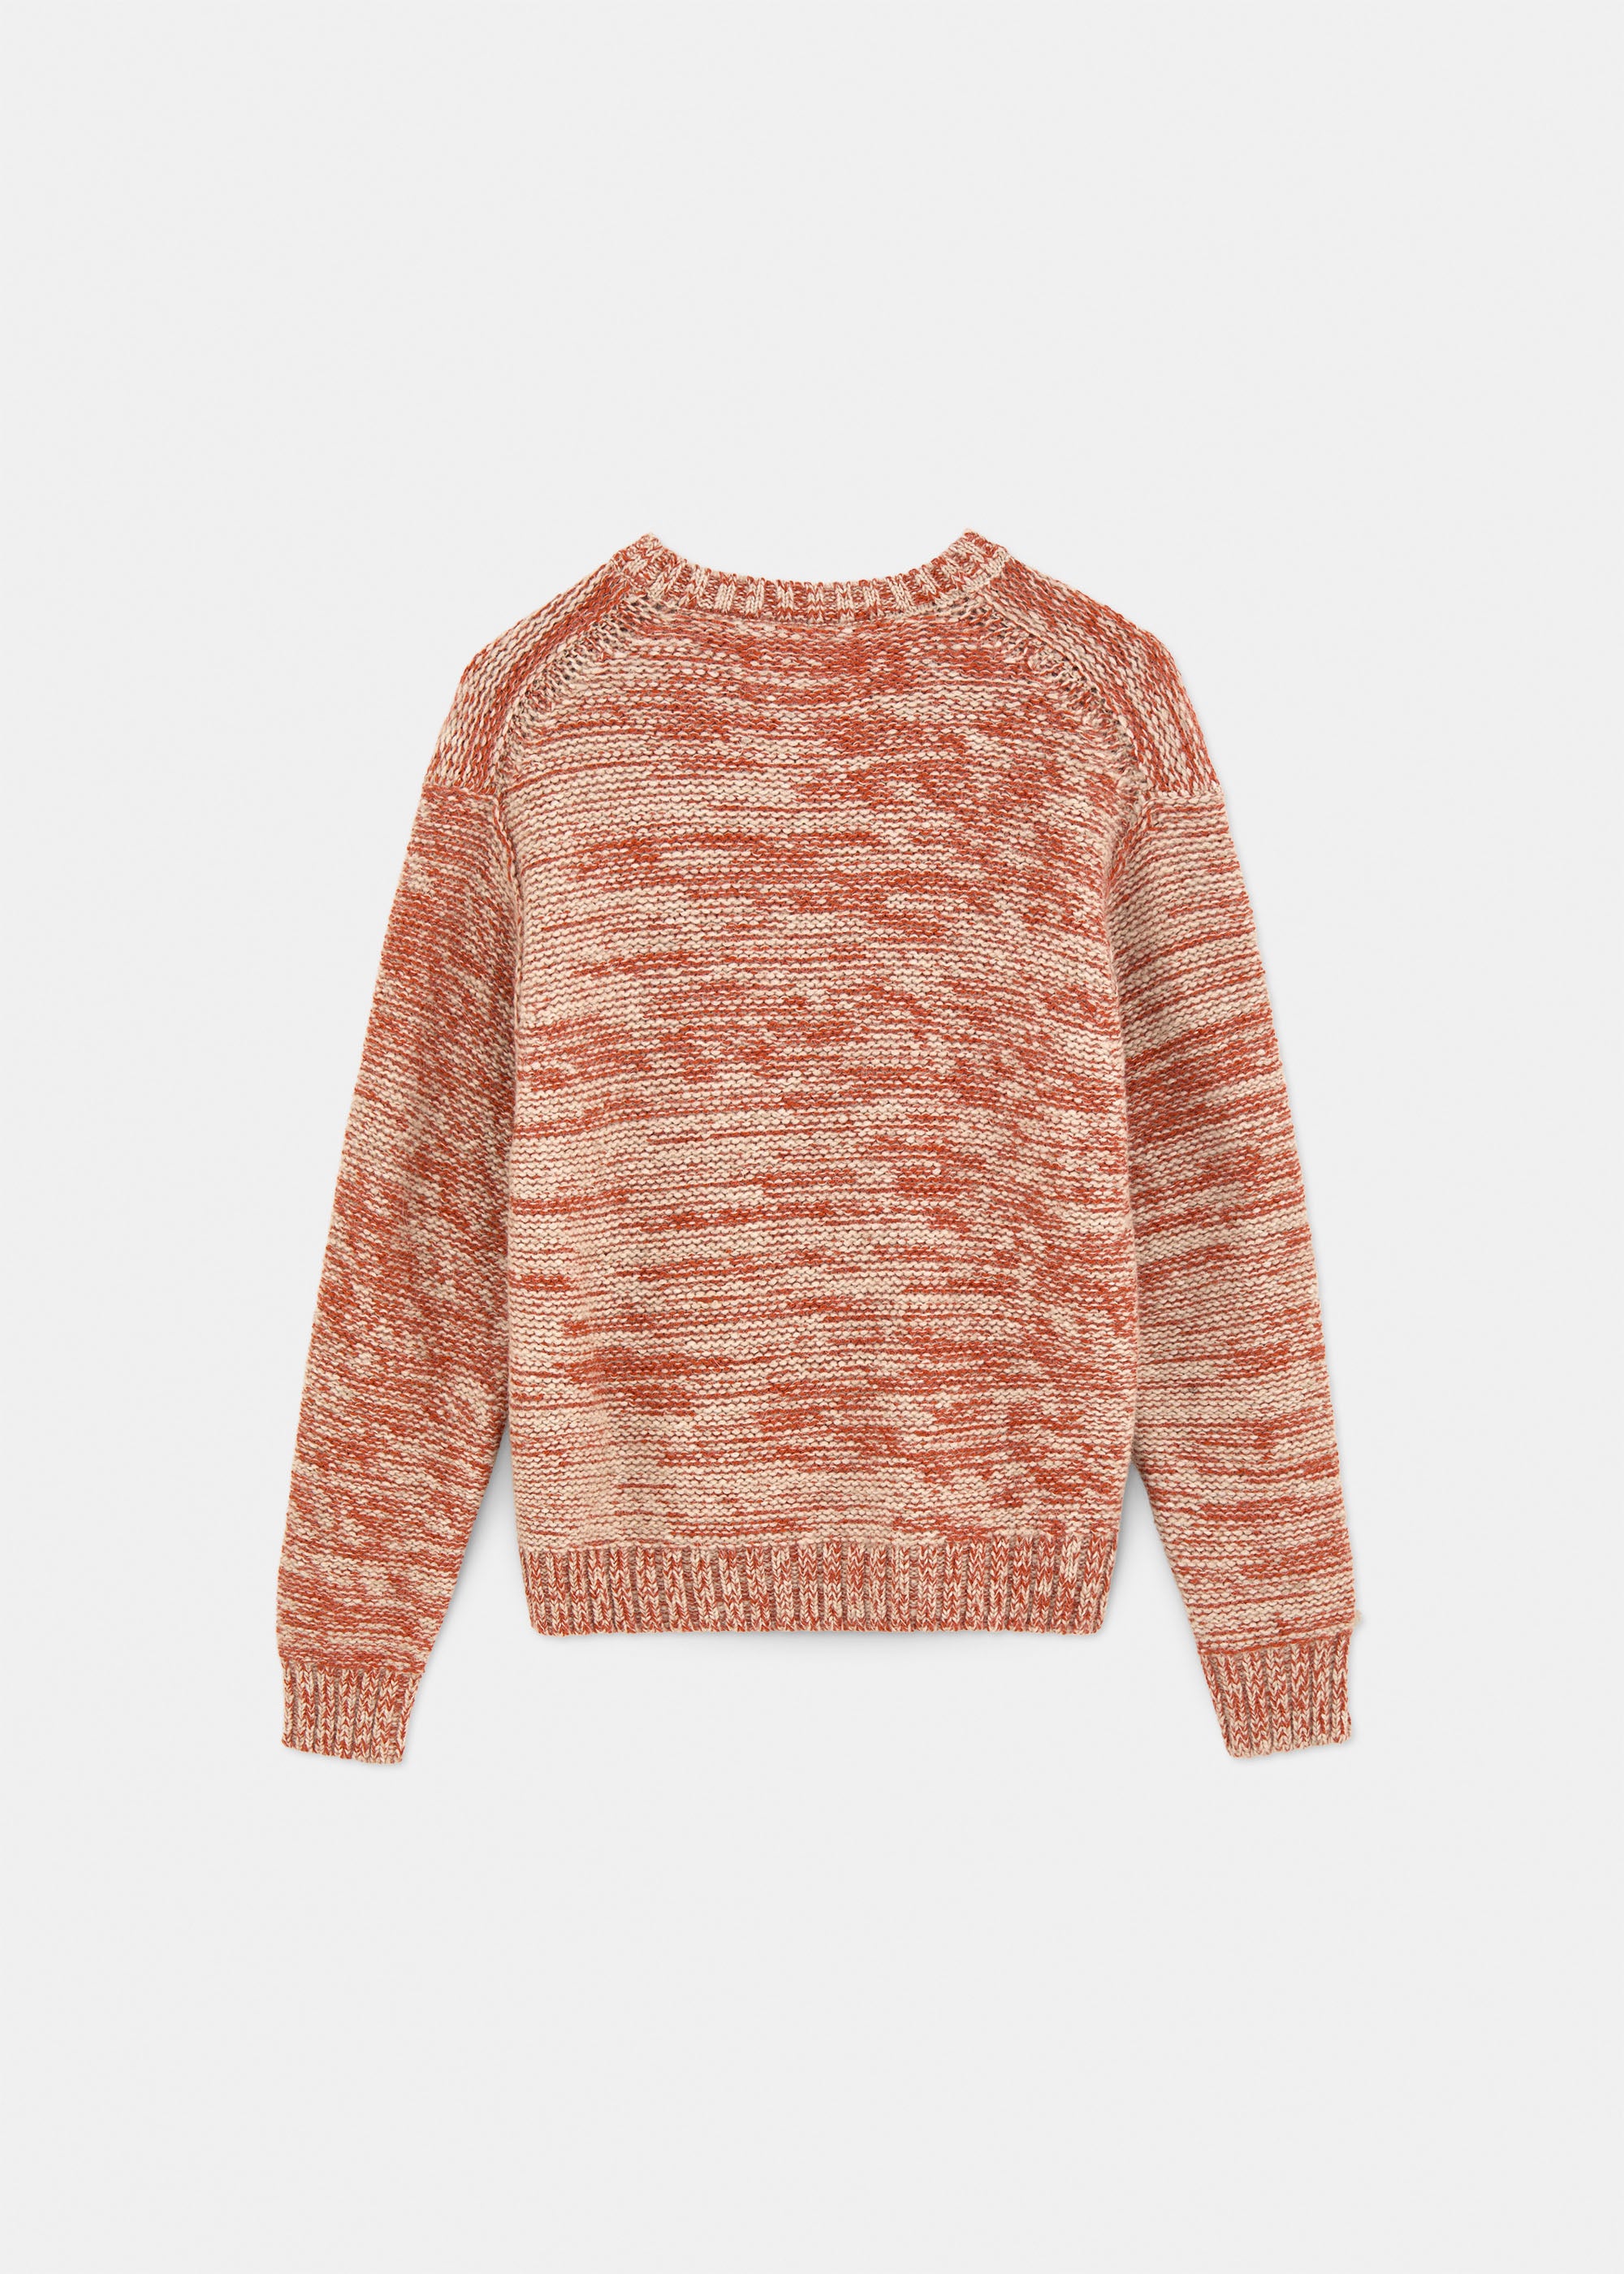 Blair llama wool sweater | Mix Orange